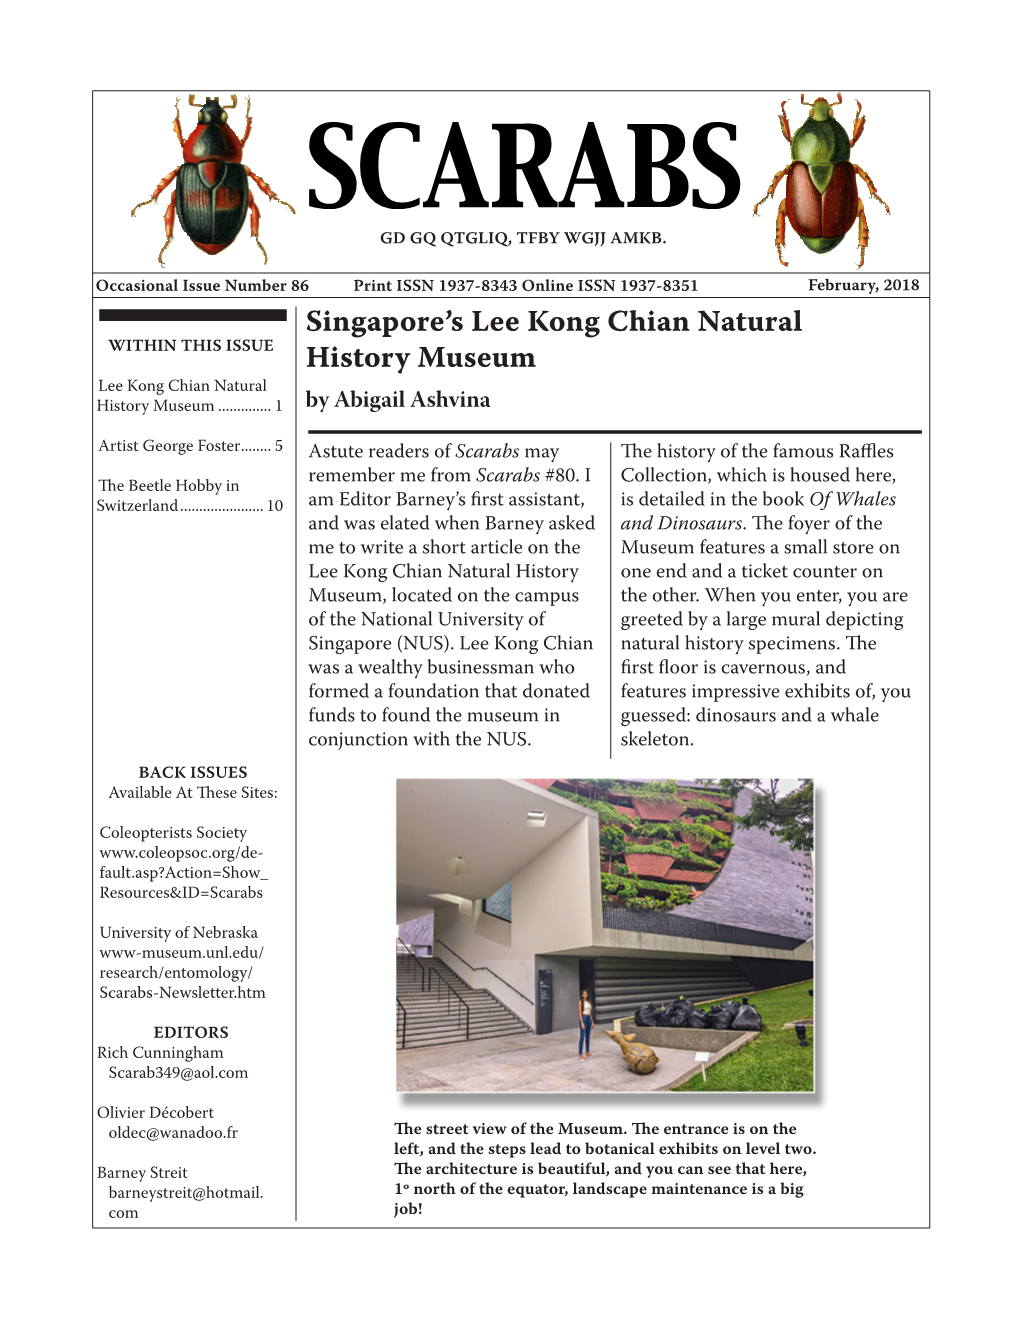 Singapore's Lee Kong Chian Natural History Museum